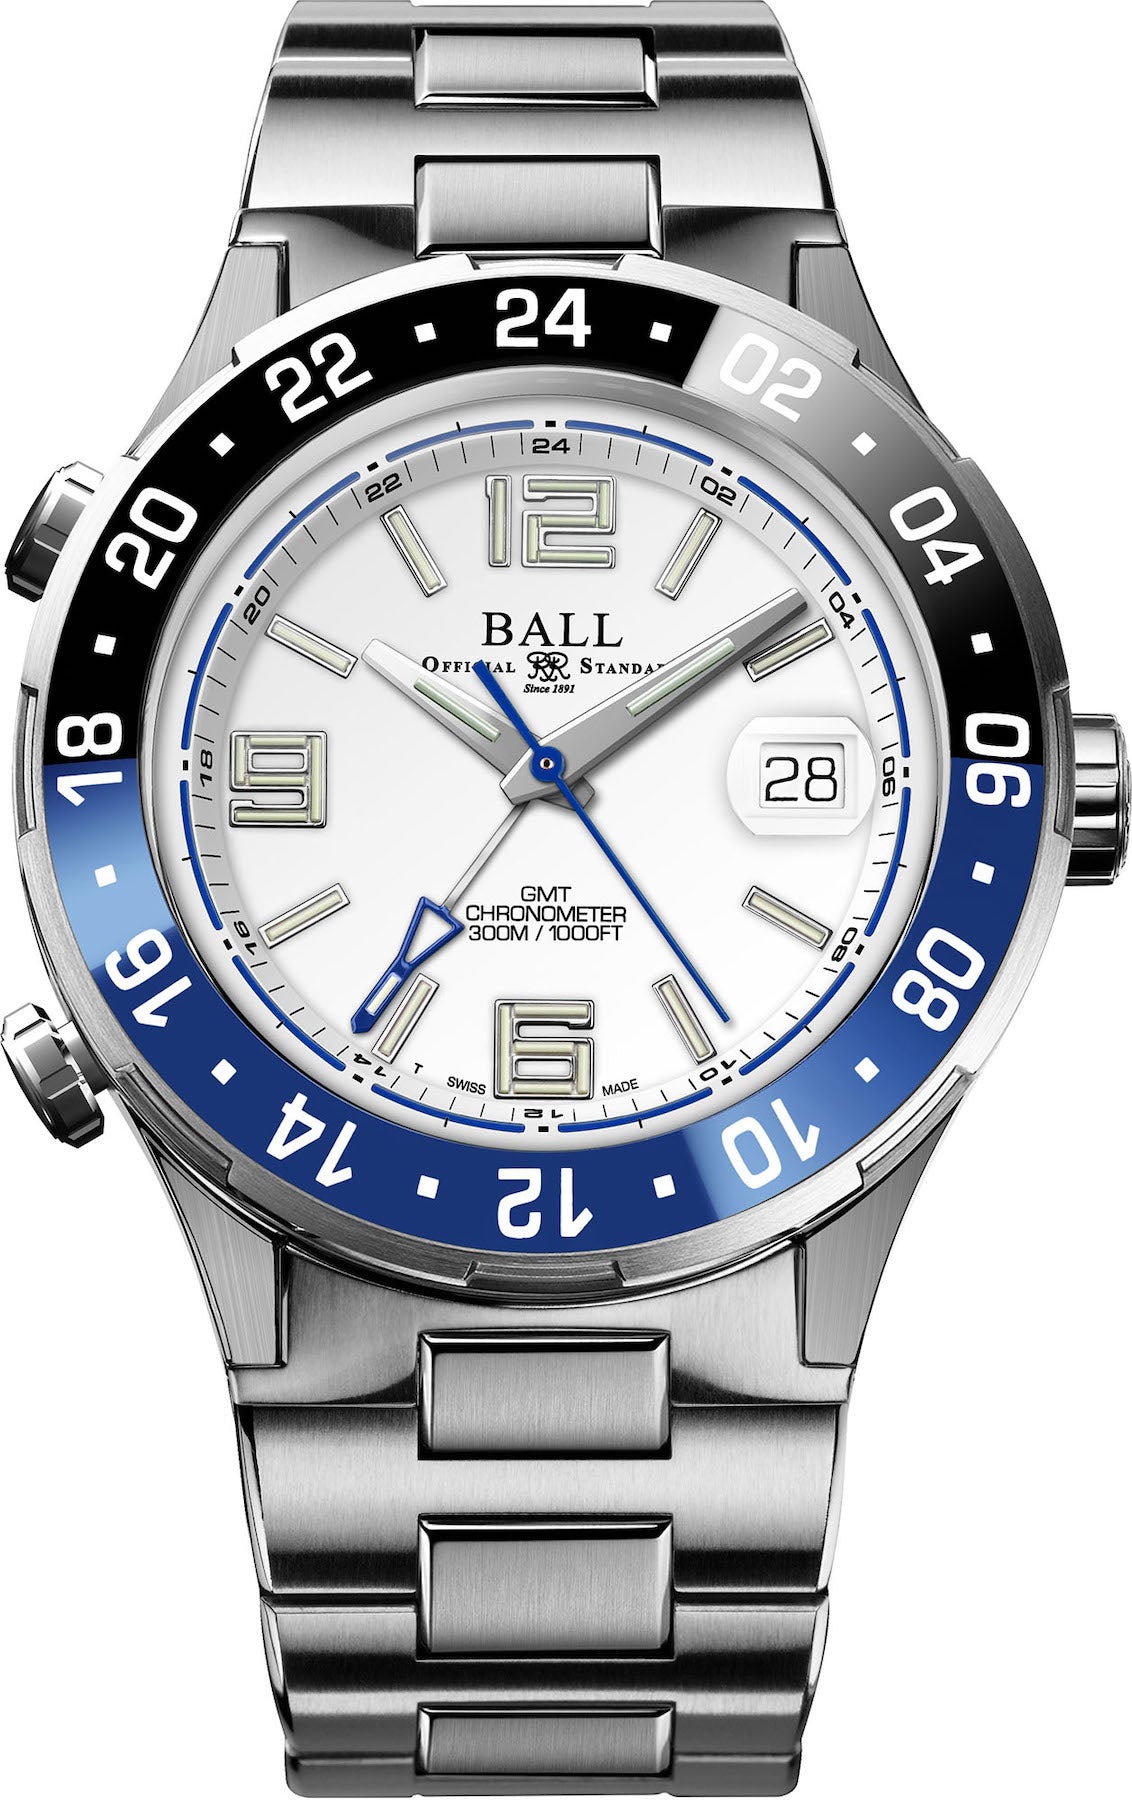 Photos - Wrist Watch Ball Watch Company Roadmaster Pilot GMT Limited Edition - White BL-2483 